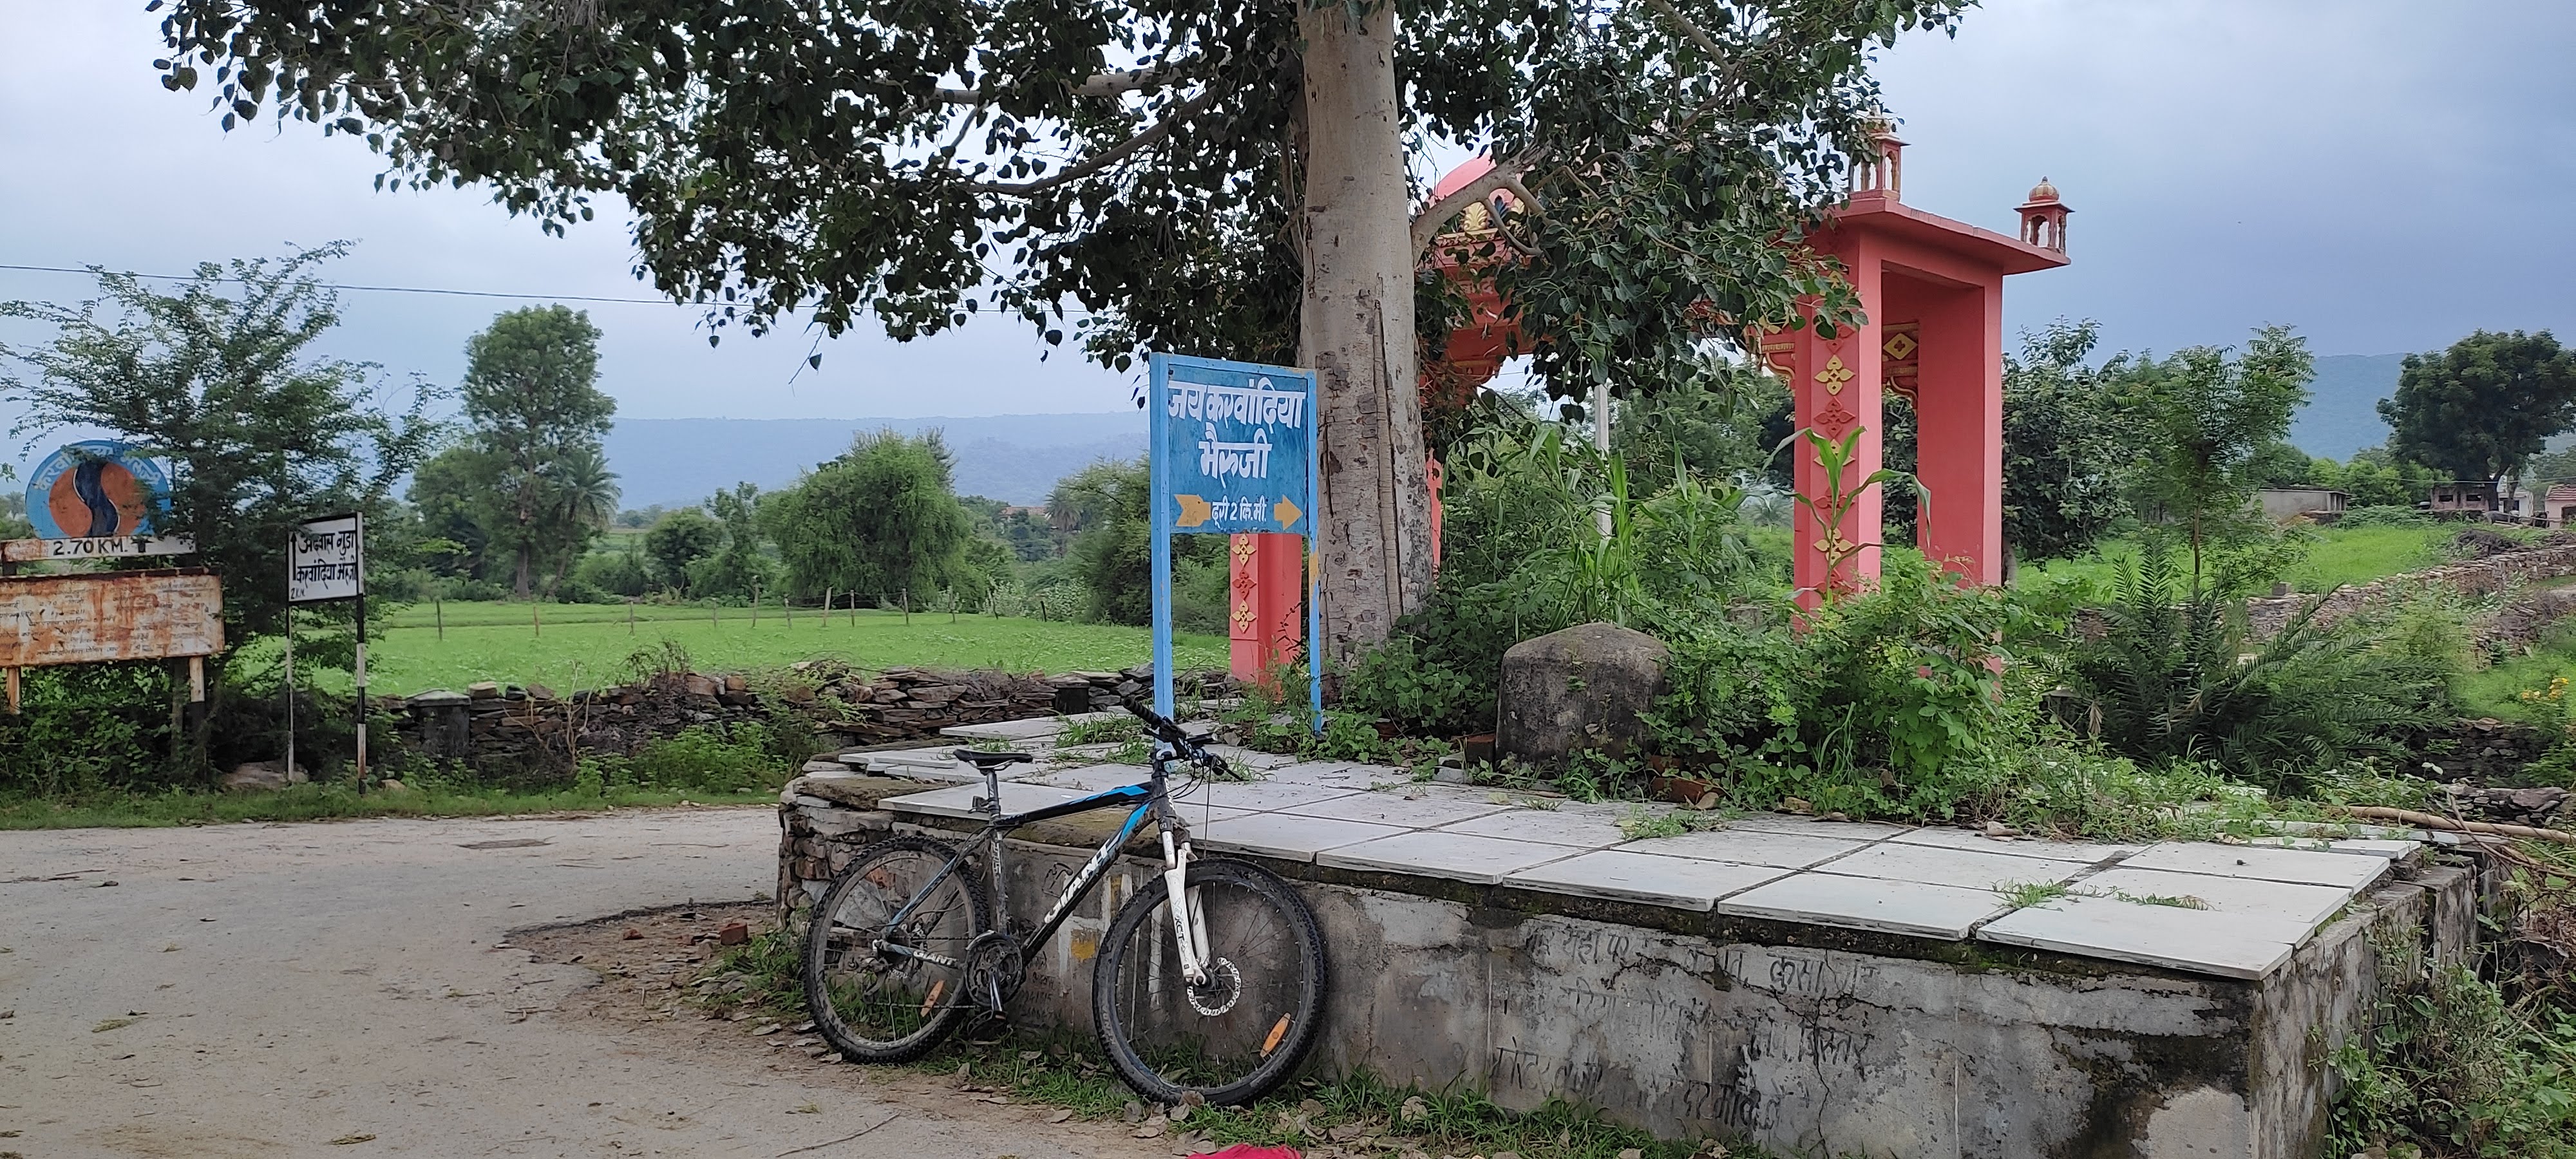 Picturesuqe cycling route via Adwas village